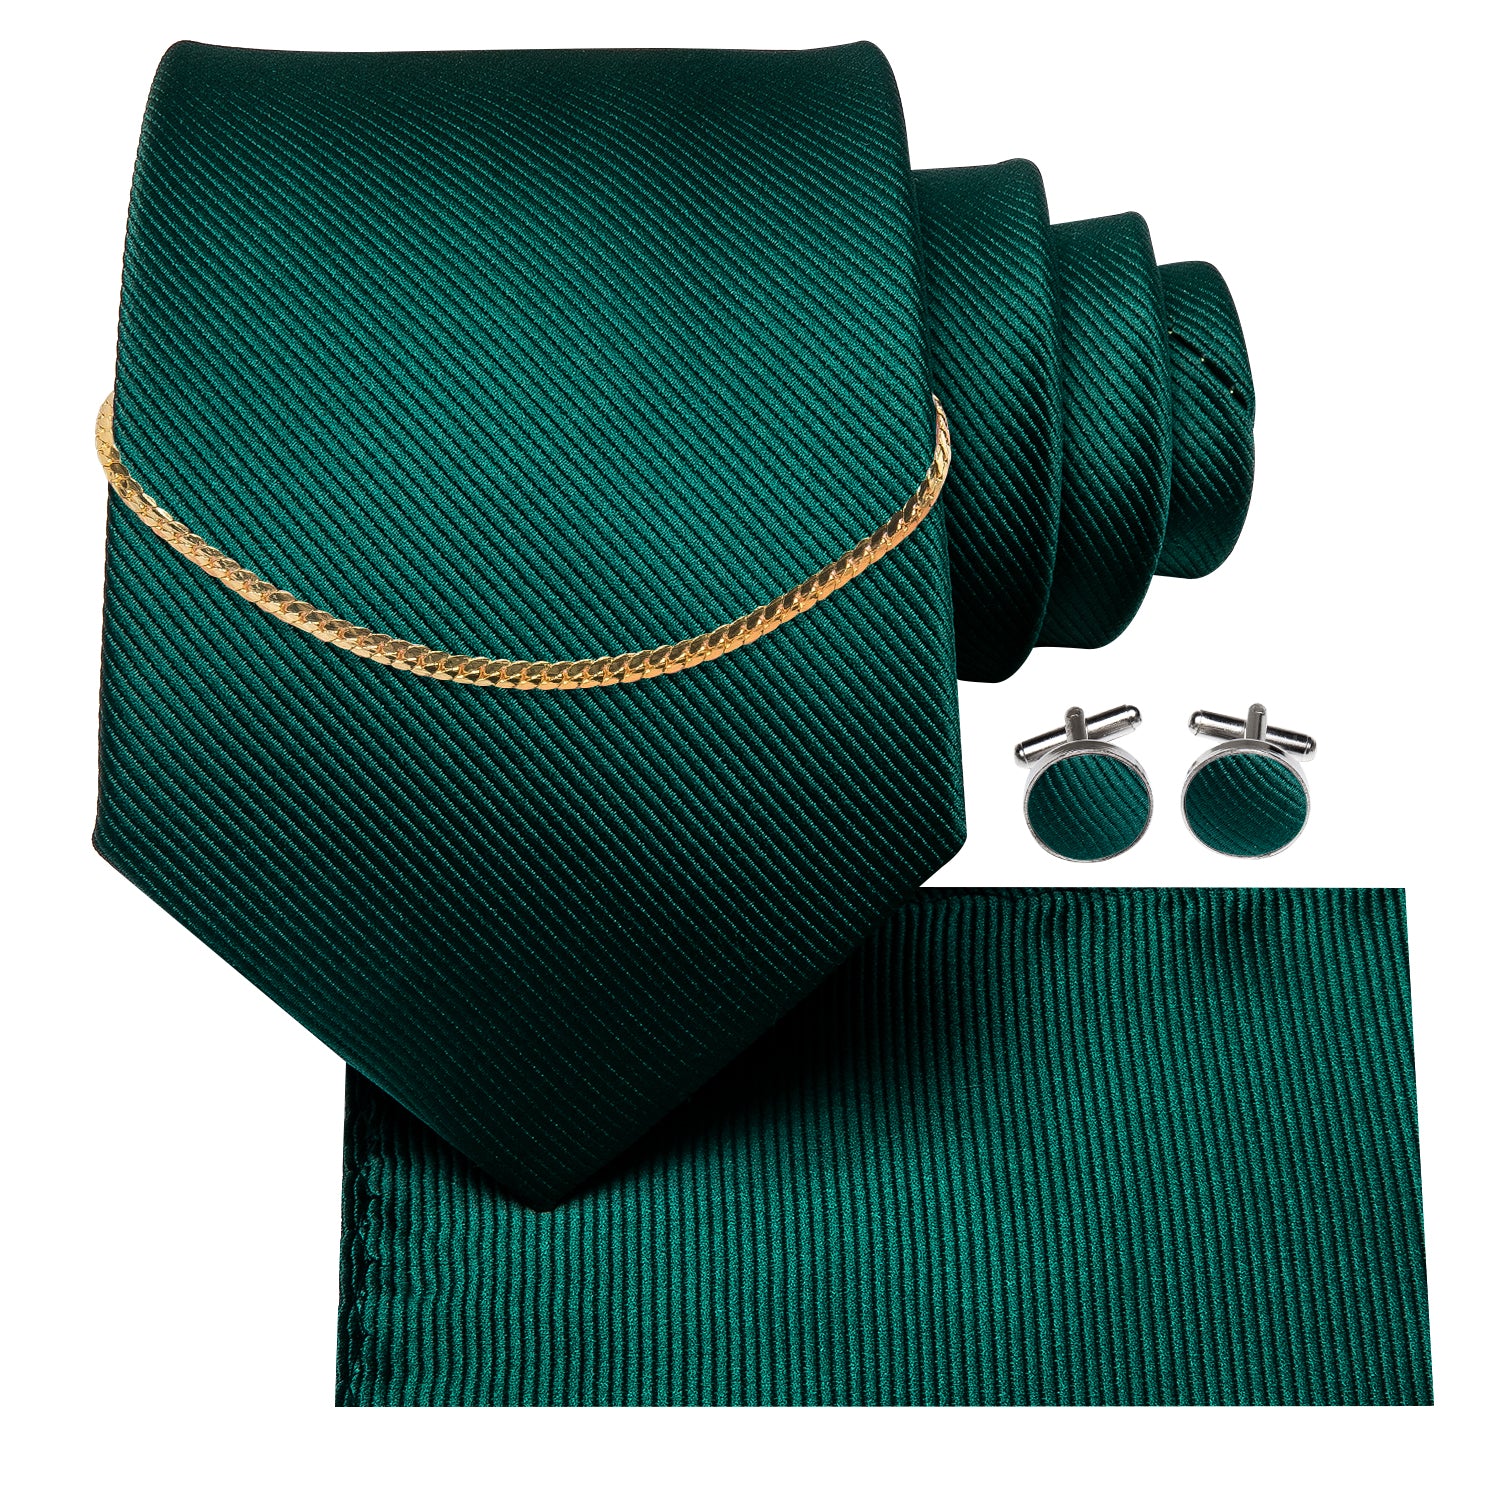 Solid Green Tie Handkerchief Cufflinks Set With Golden Chain